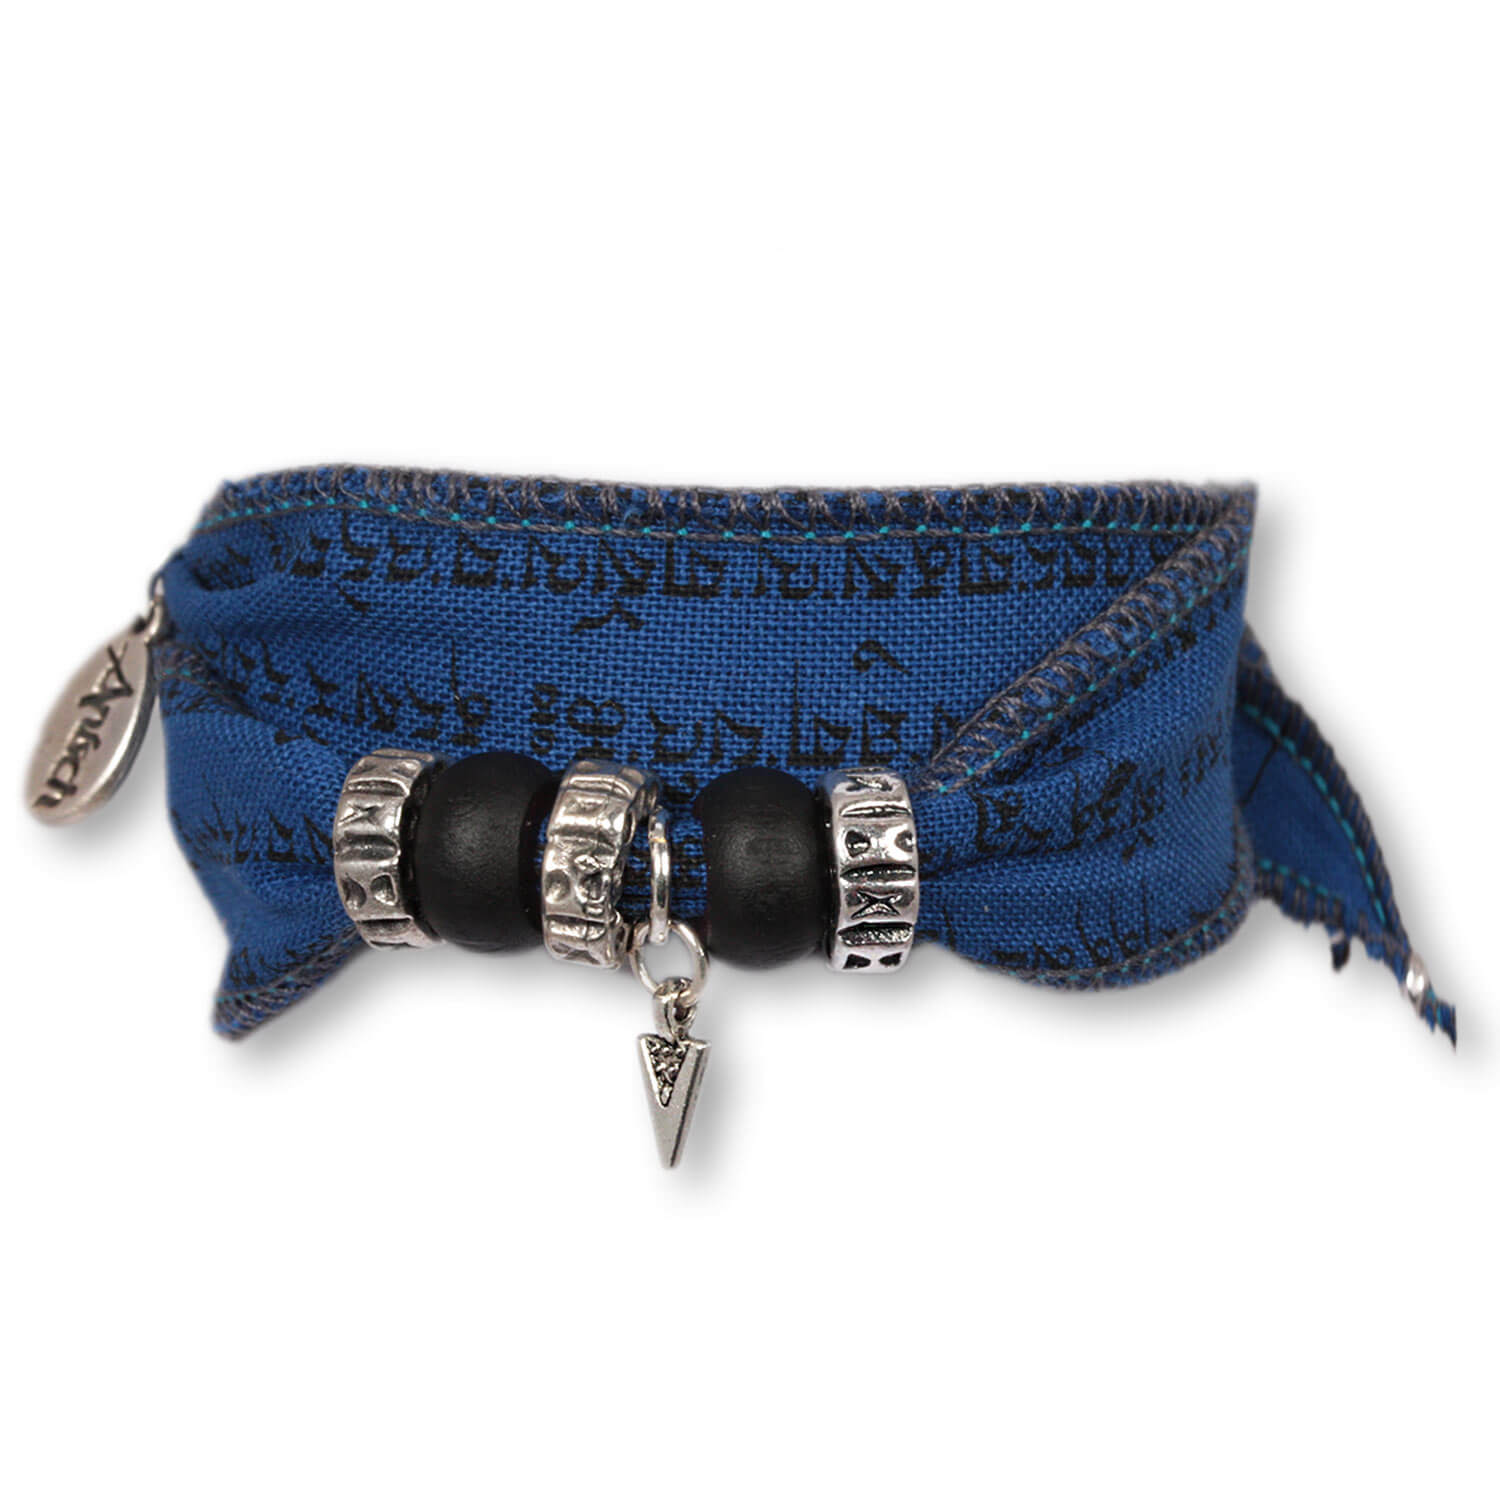 Space Arrow - Tibetan Wish bracelet made from Tibetan prayer flags